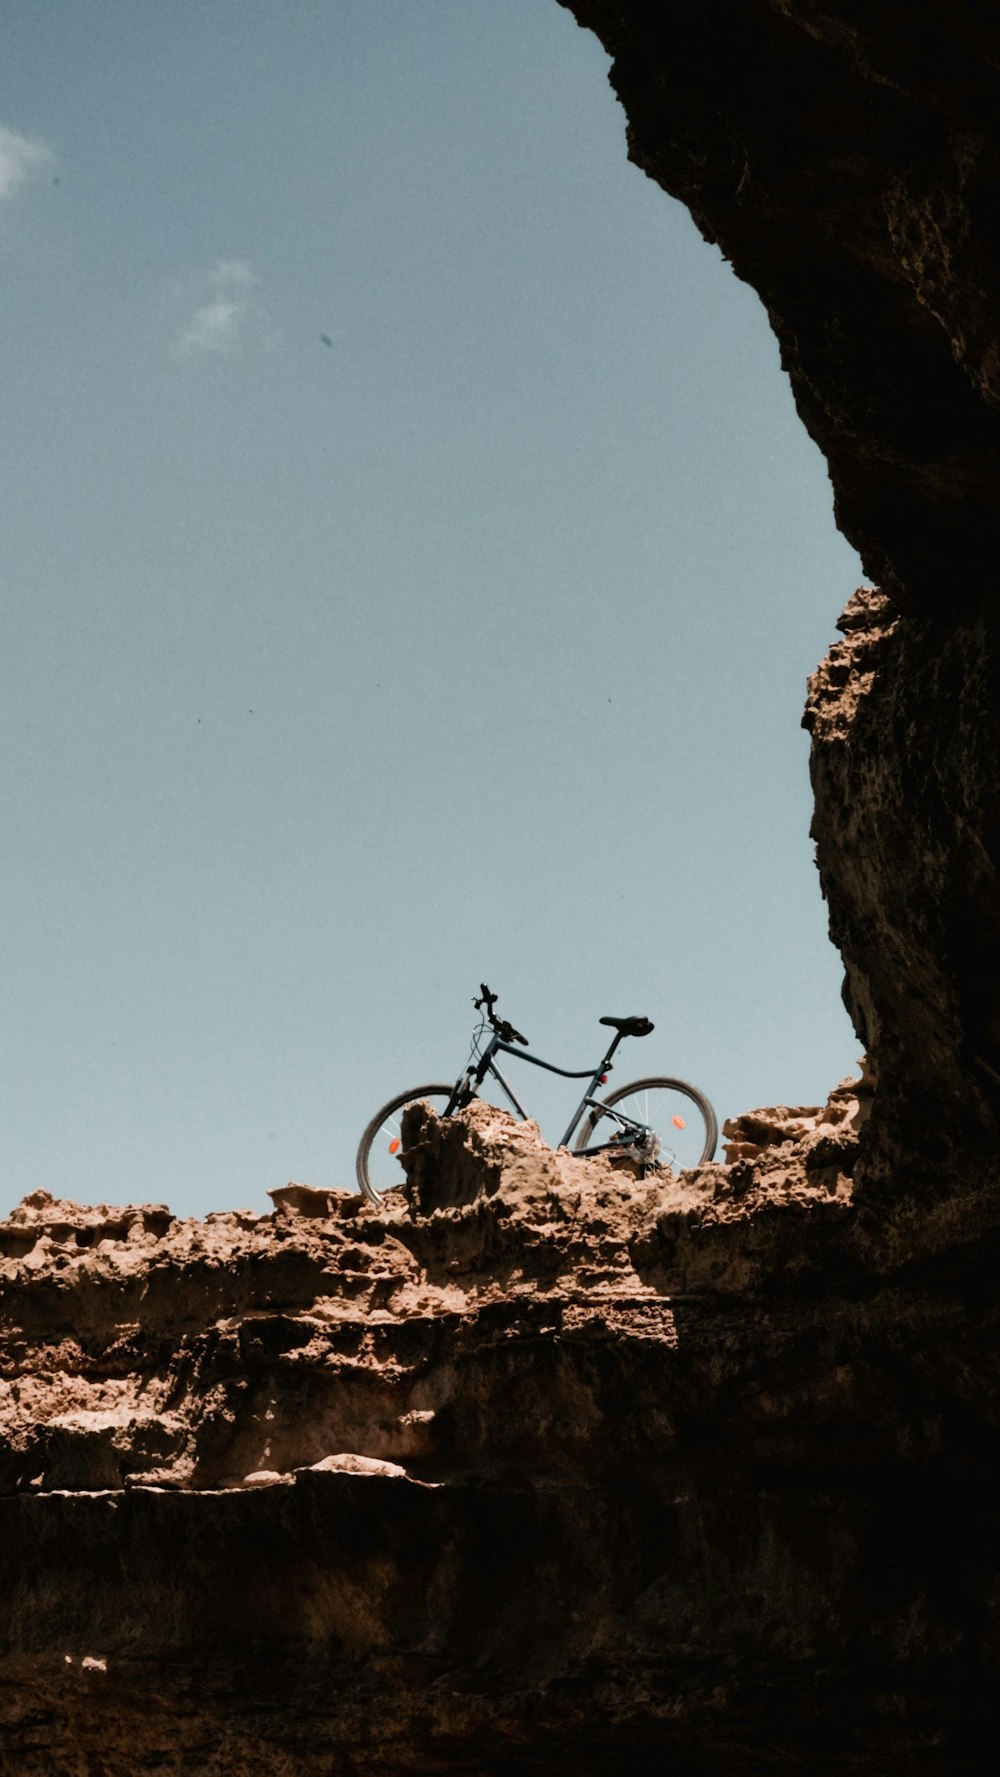 black mountain bike on brown rock formation during daytime